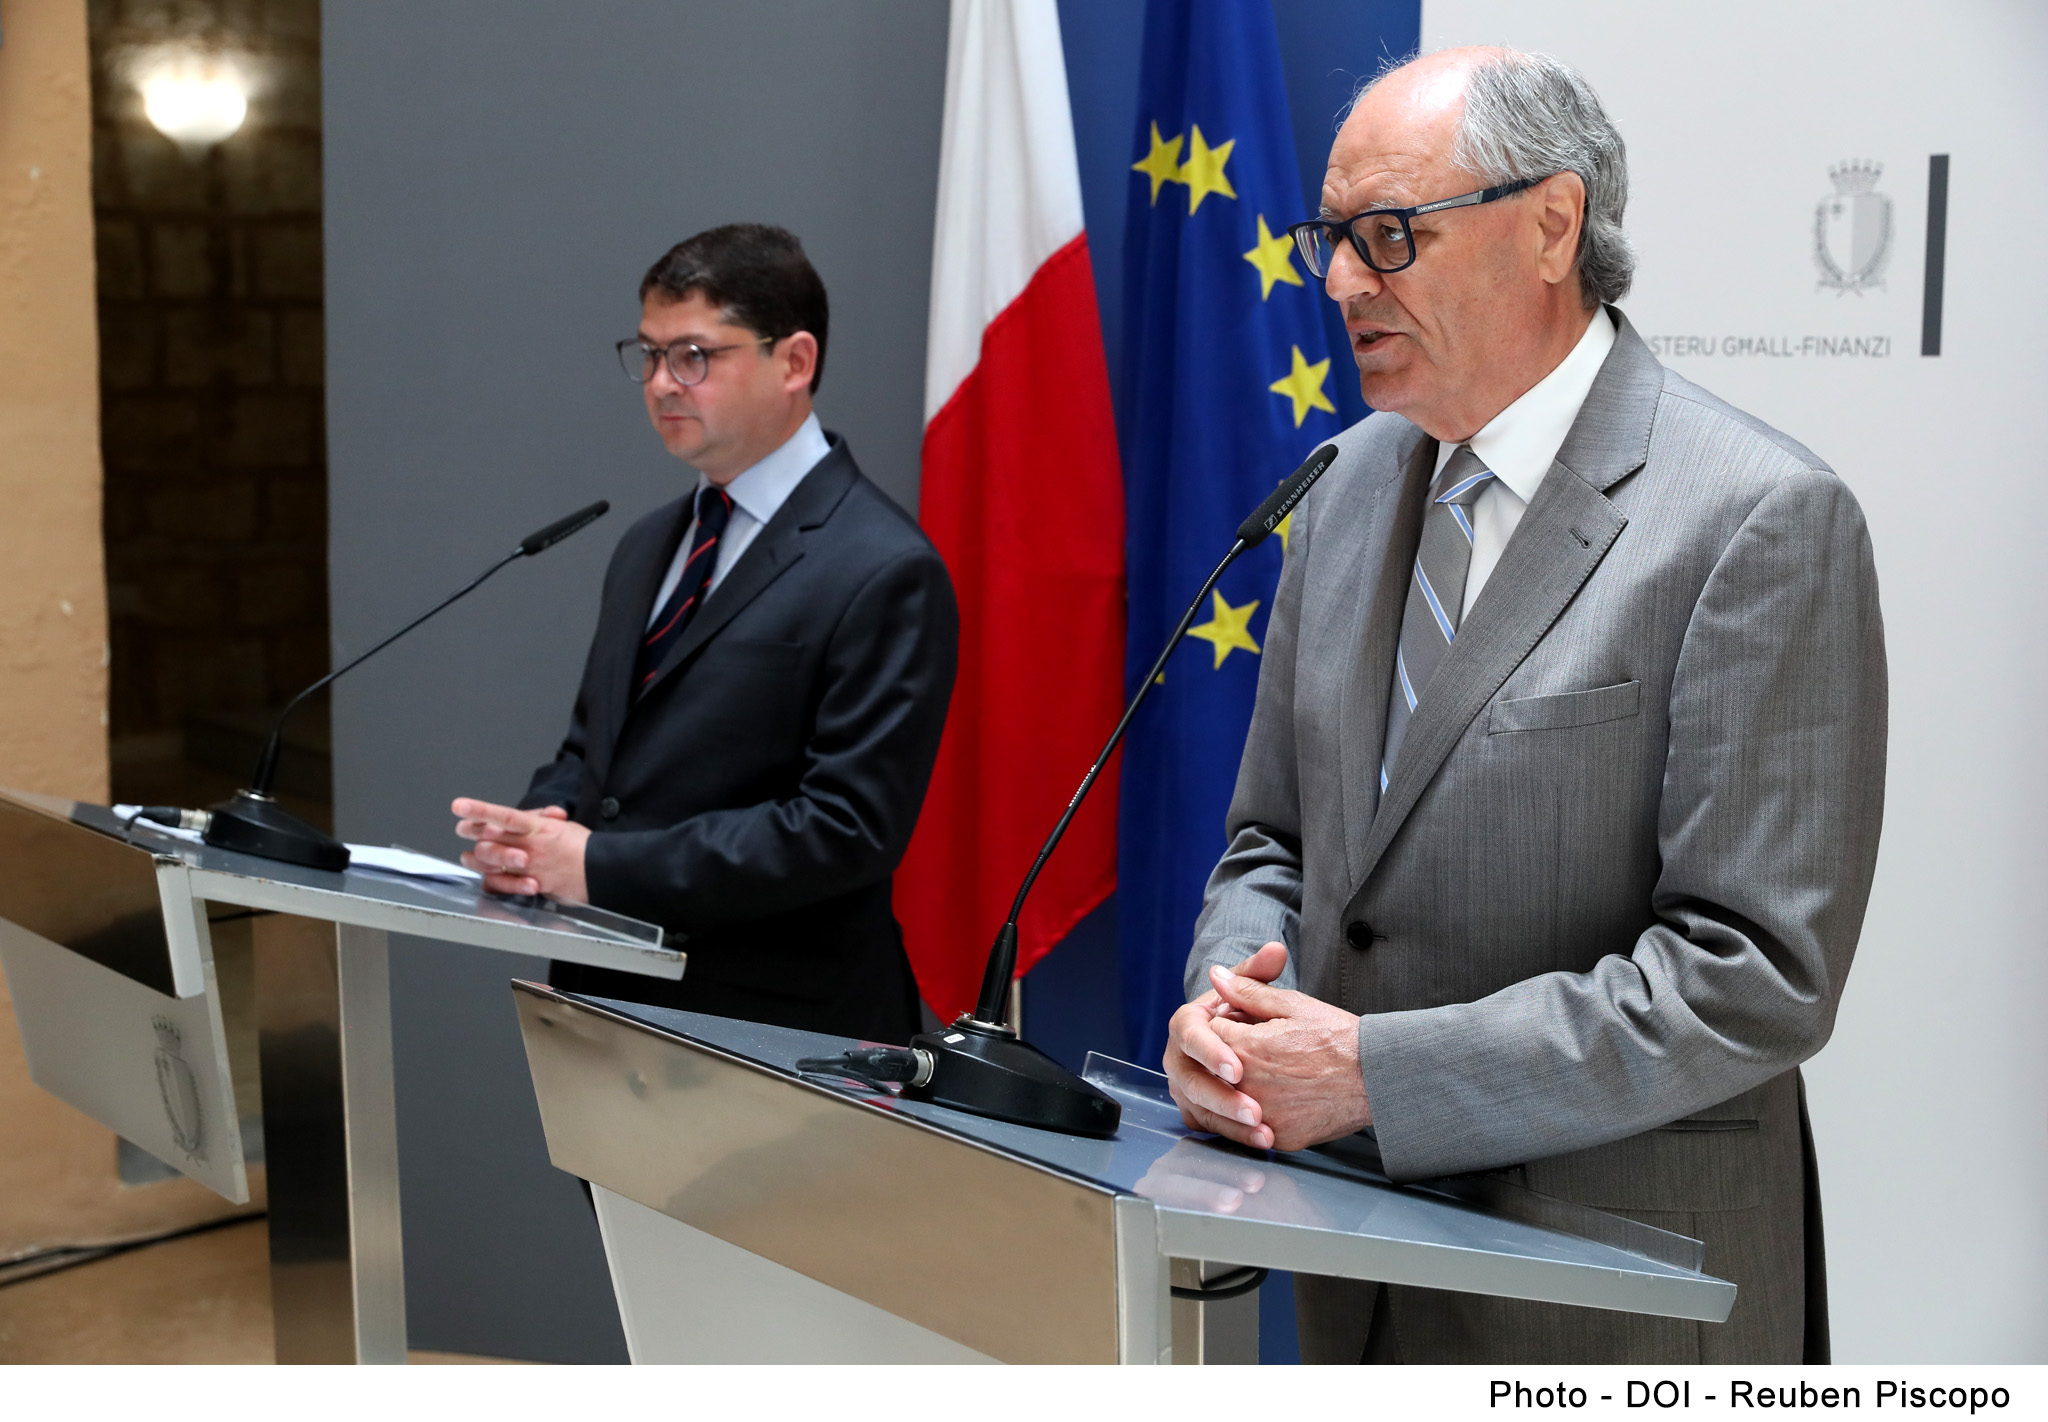 Malta praised for being a longstanding partner at the EBRD